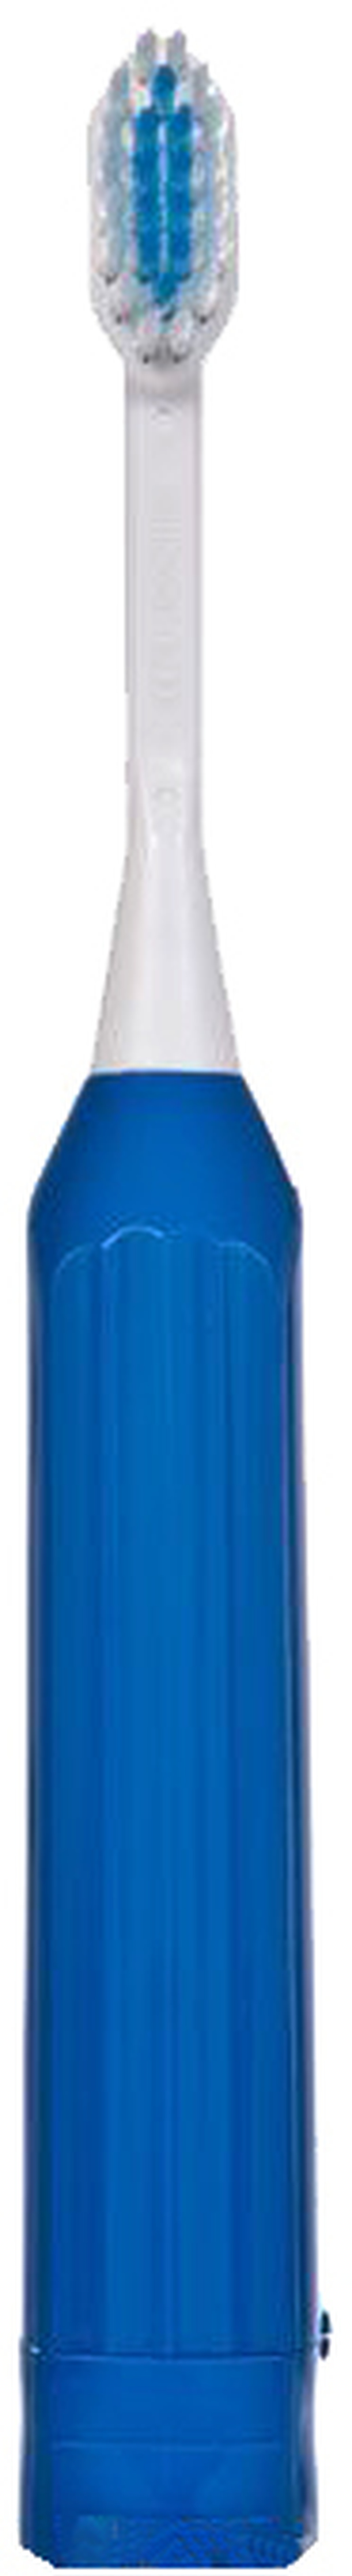 Электрическая зубная щетка Hapica Minus iON DB-3XB, синяя фото